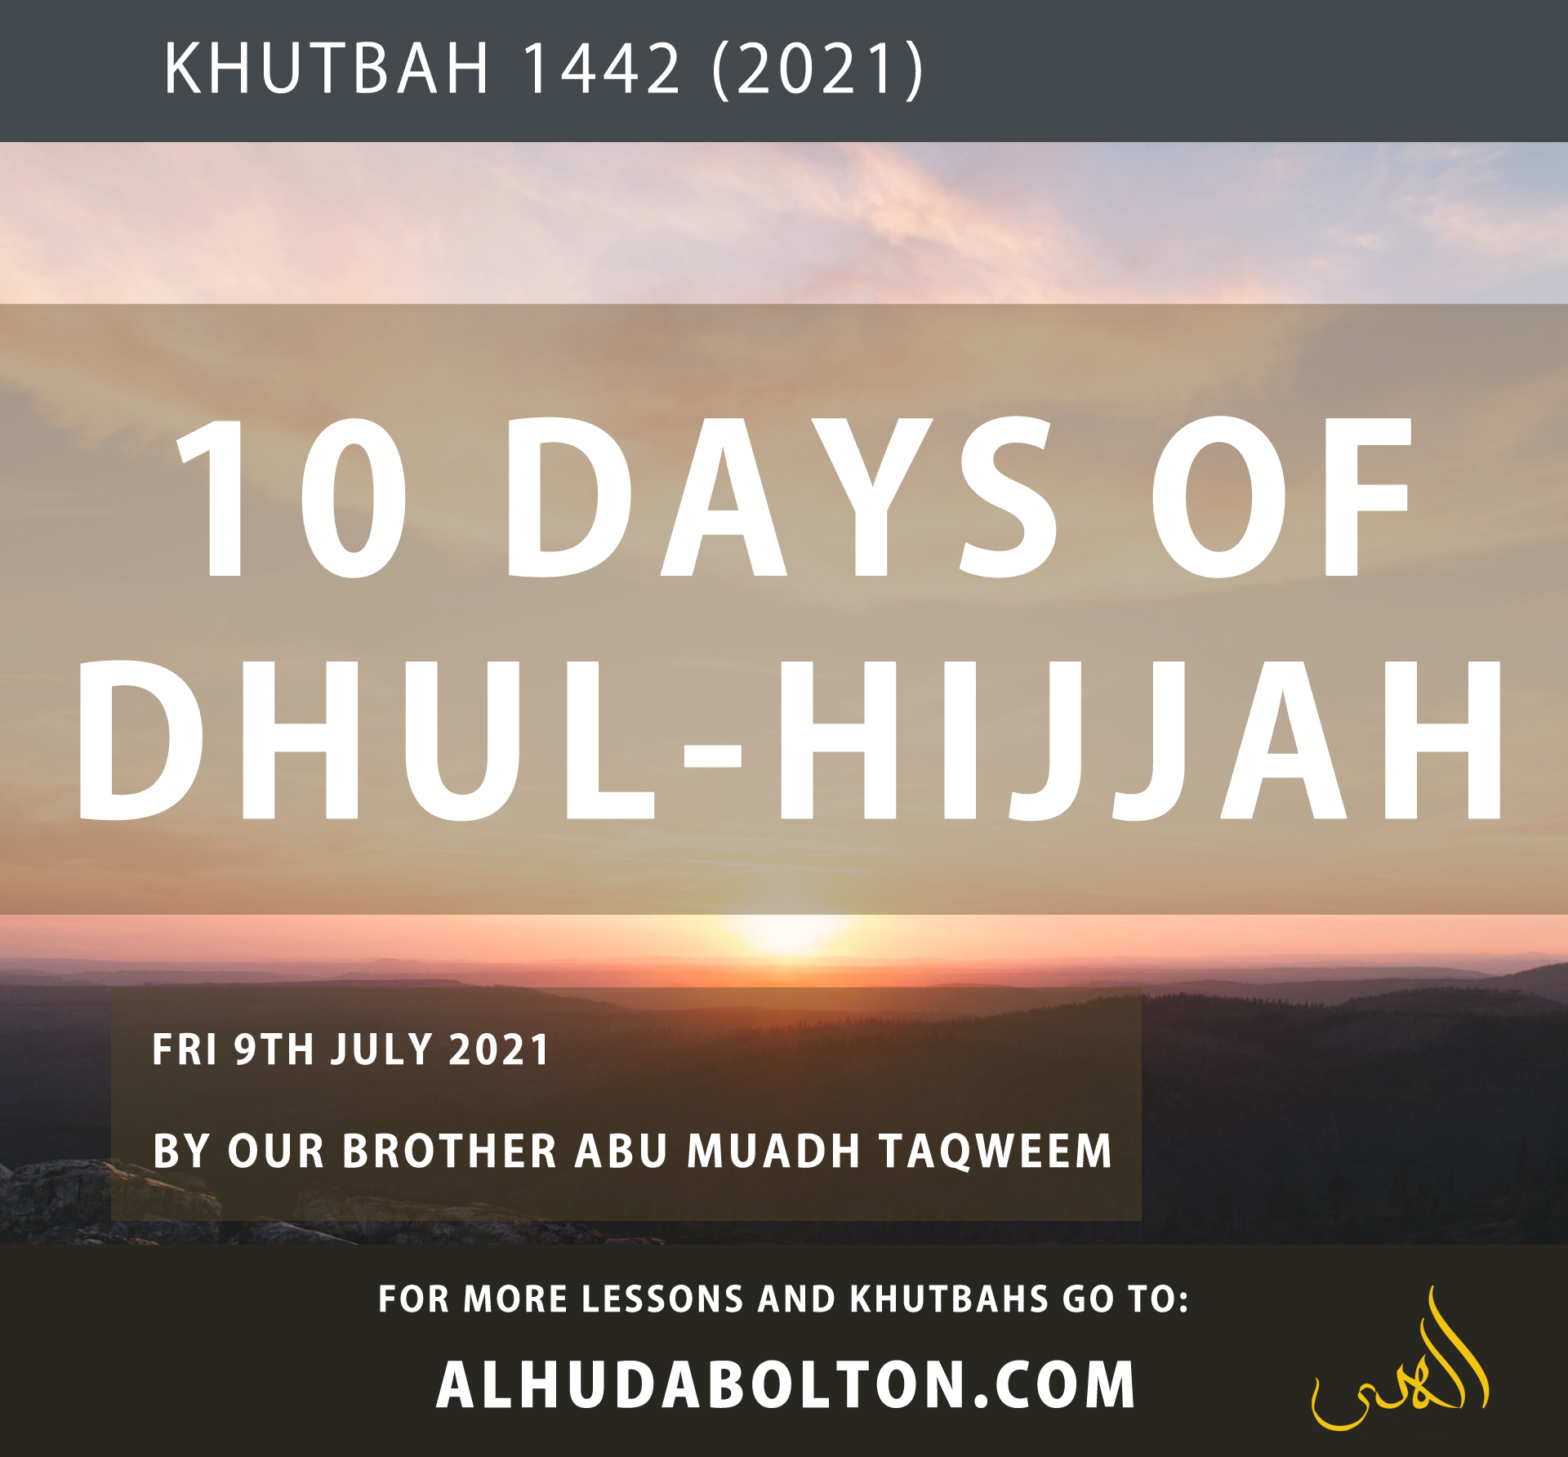 Khutbah: 10 Days of Dhul-Hijjah